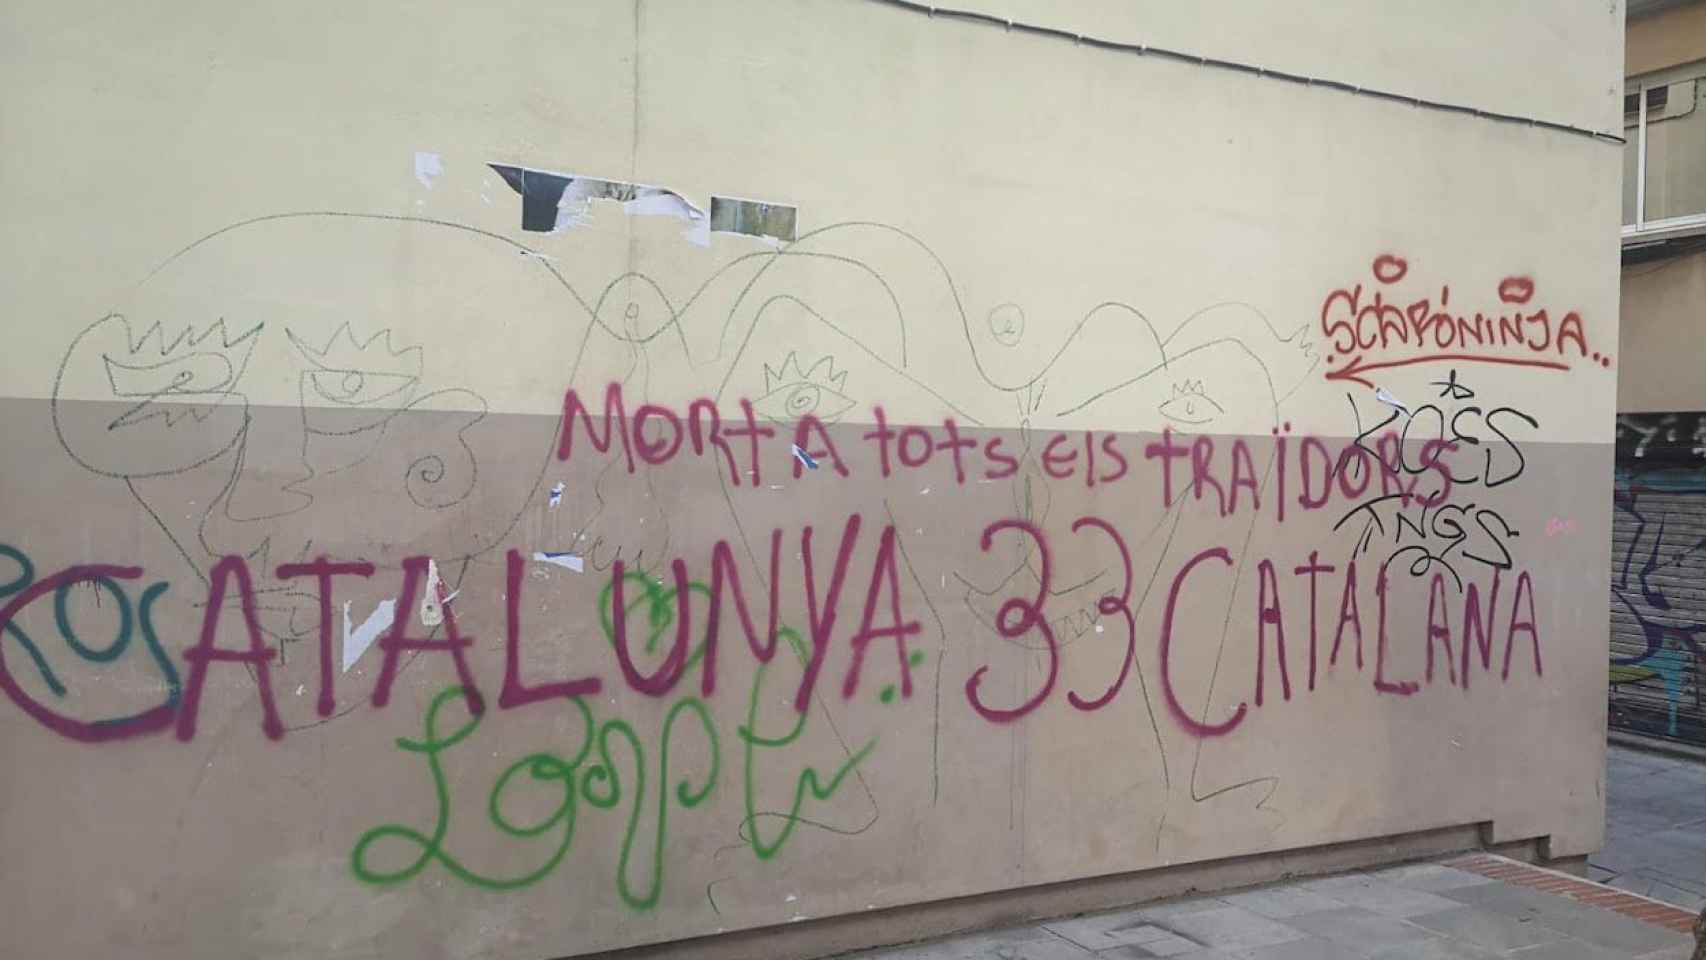 Aparece una pintada ultra e independentista en una plaza de Gràcia / METRÓPOLI